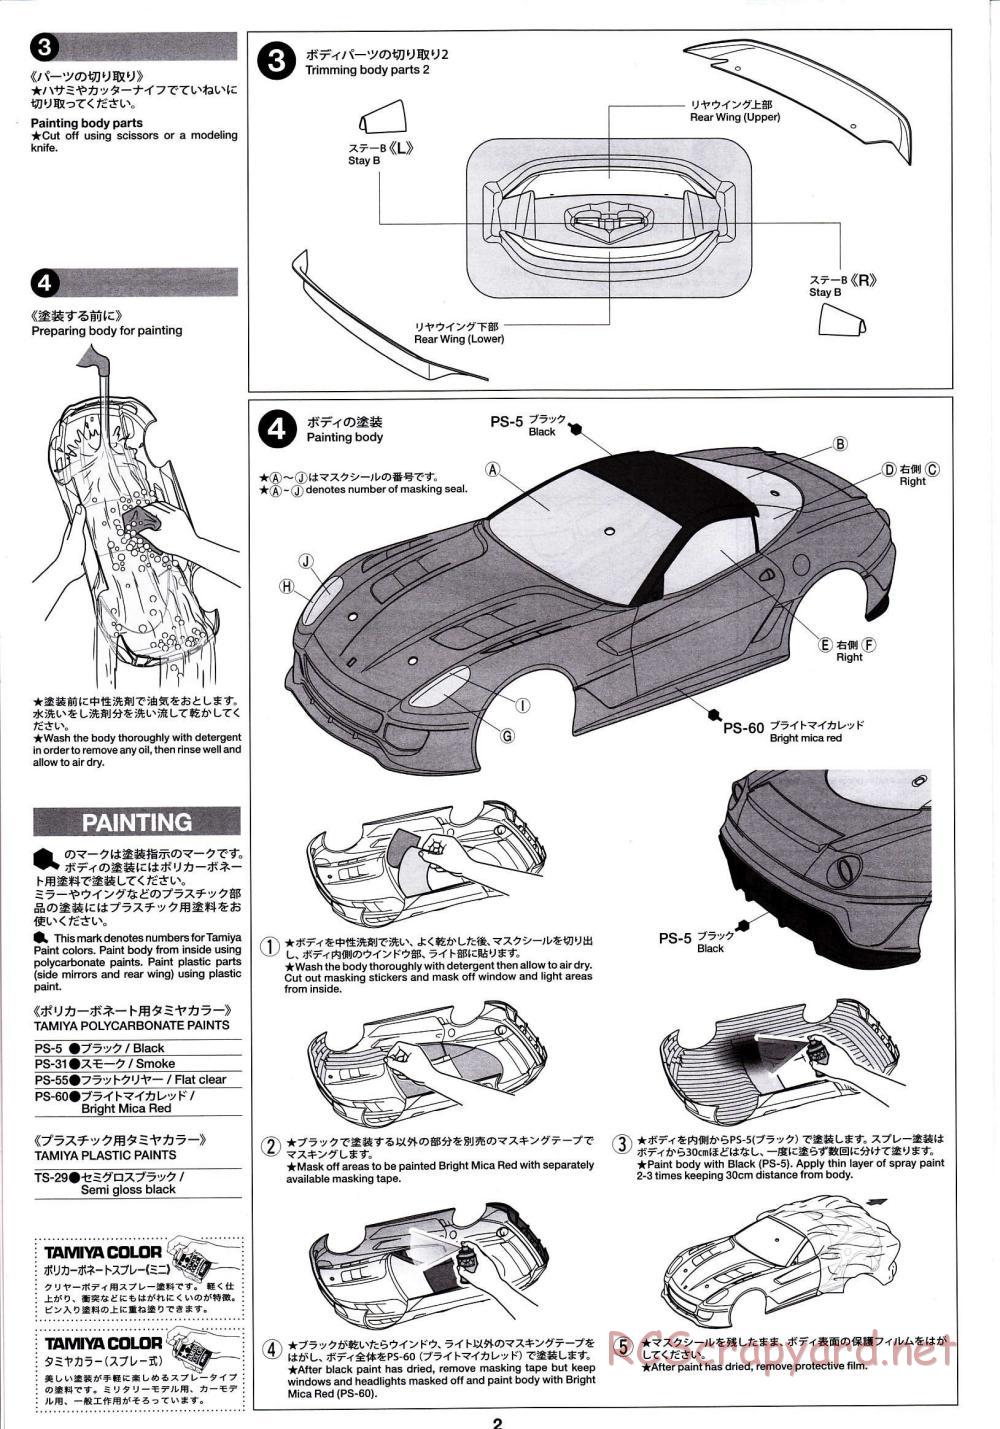 Tamiya - Ferrari 599XX - TA06 Chassis - Body Manual - Page 2